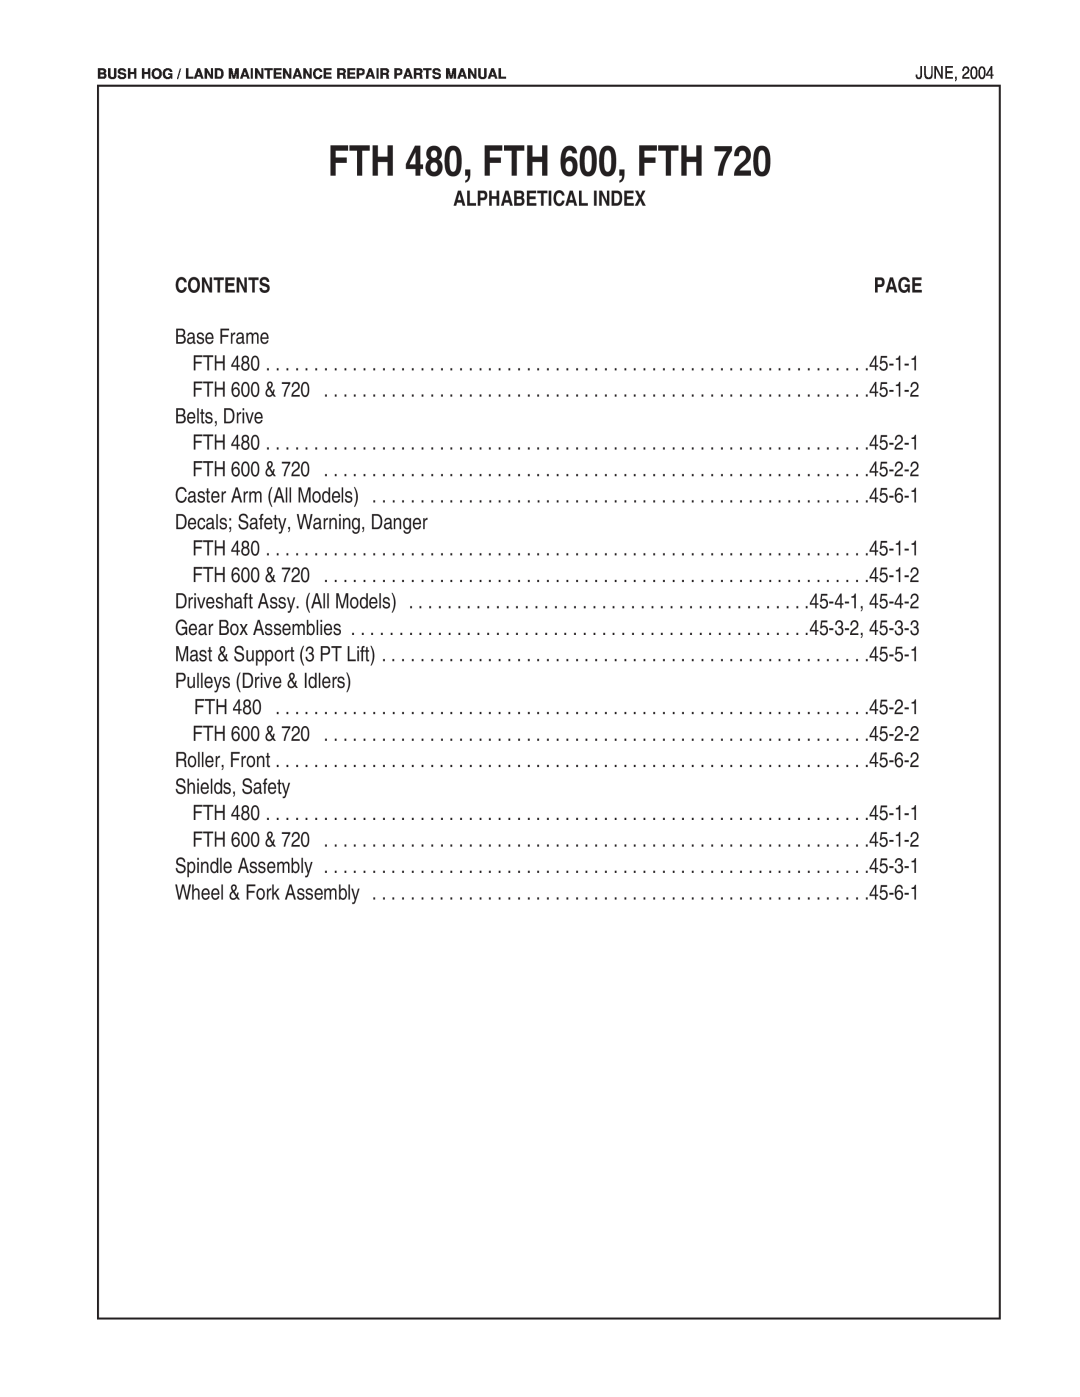 Bush Hog manual Alphabetical Index, Contents, FTH 480, FTH 600, FTH 